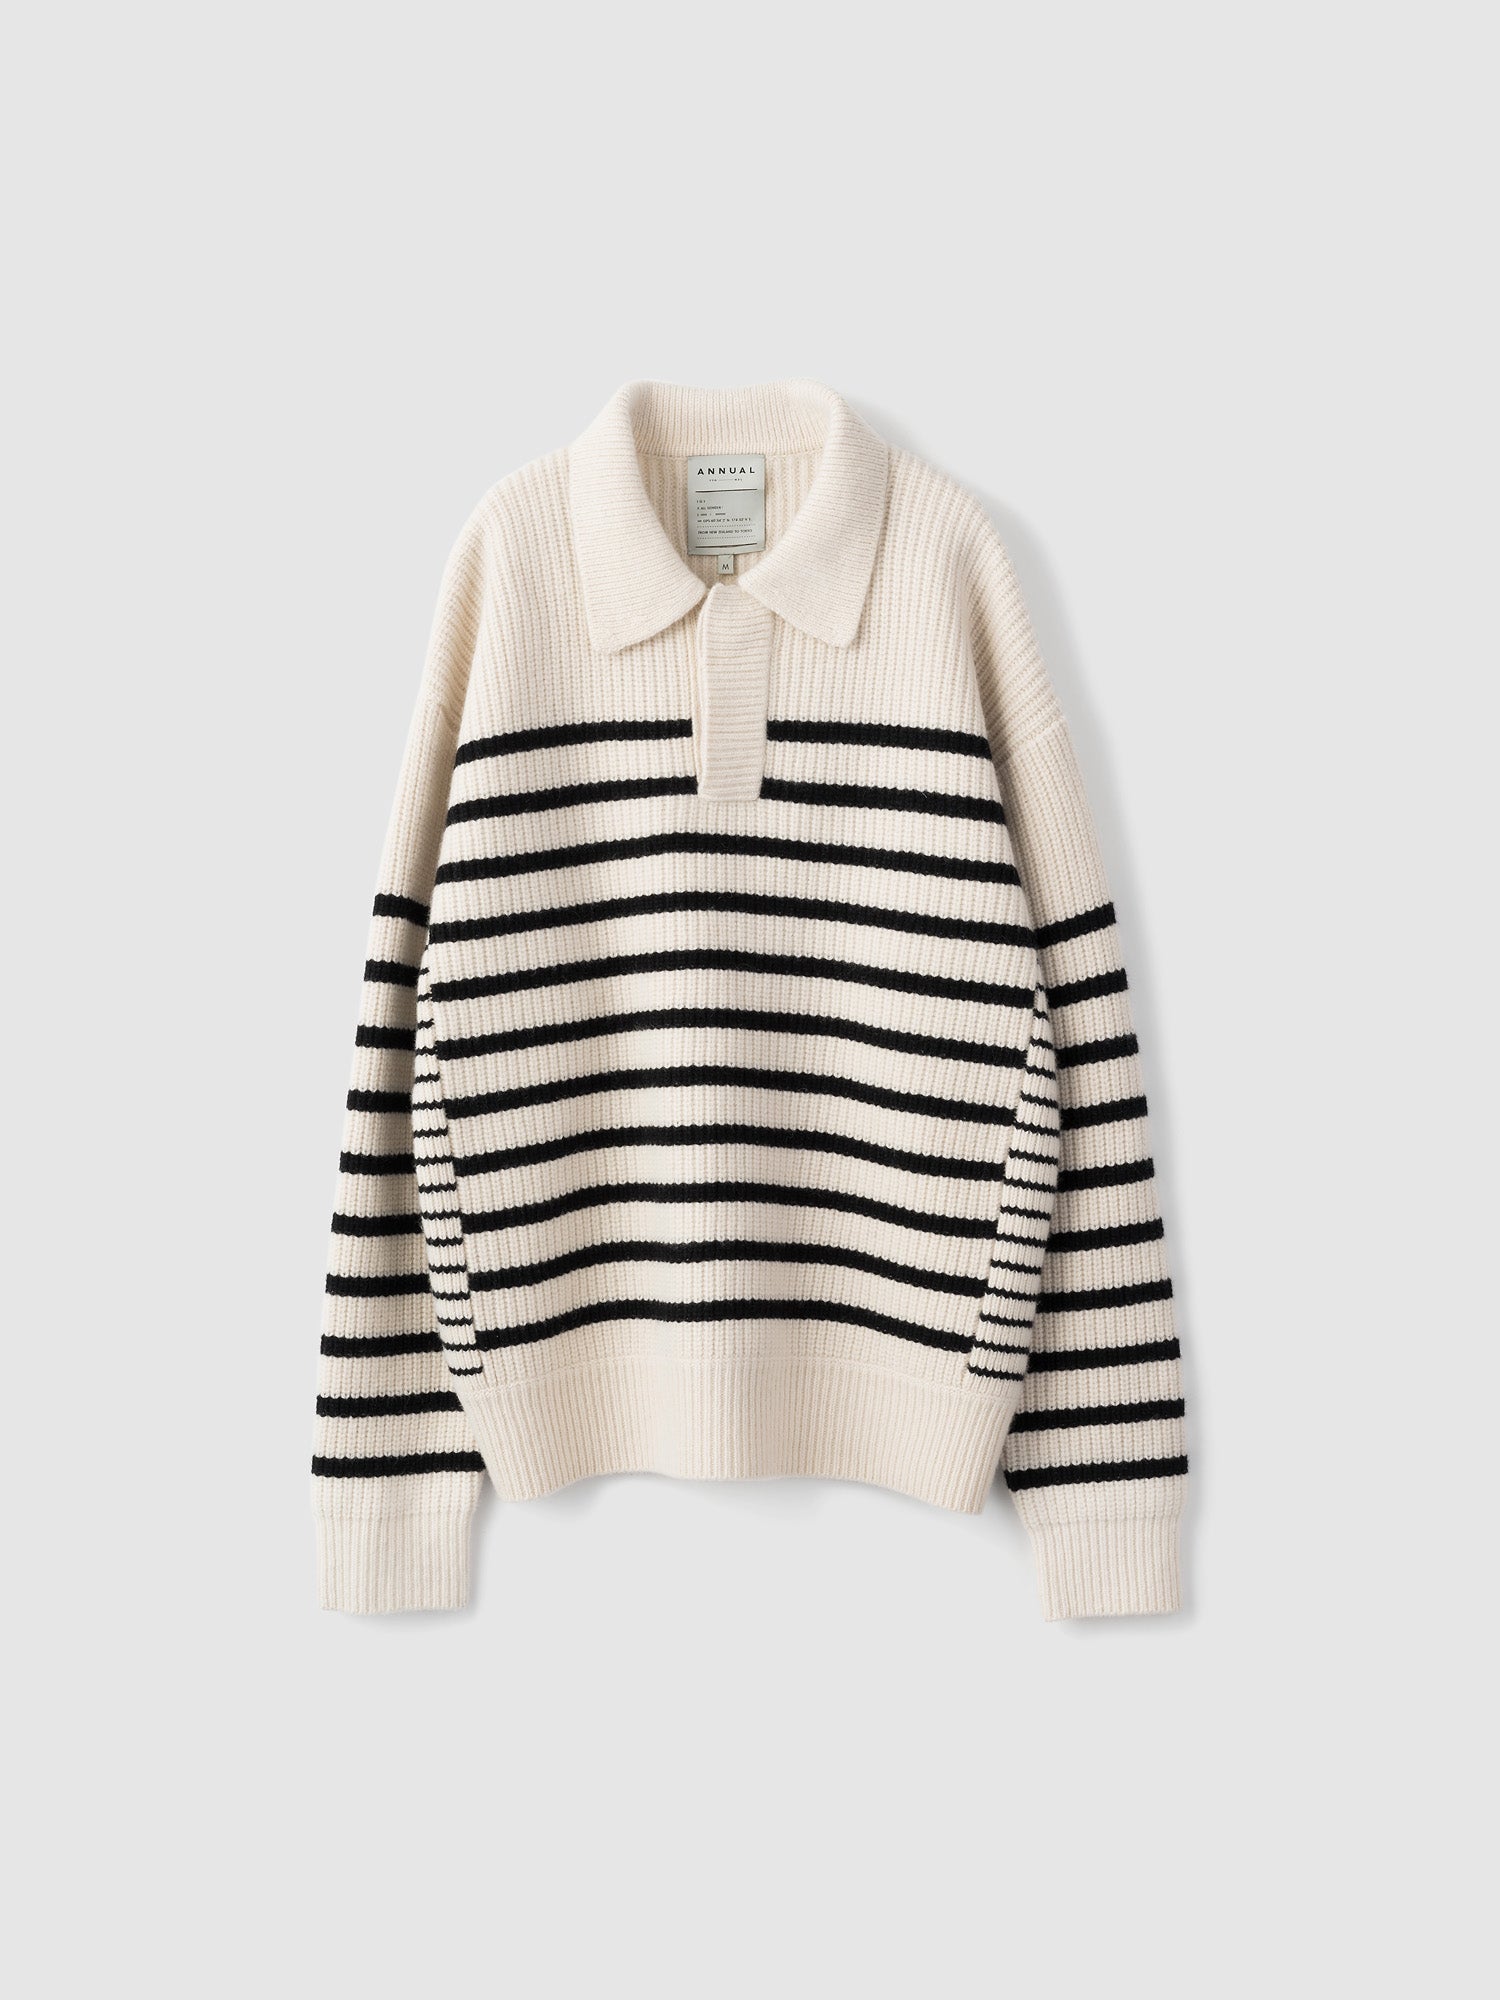 Striped Polo Sweater<BR>異なるボーダーピッチがアクセントに